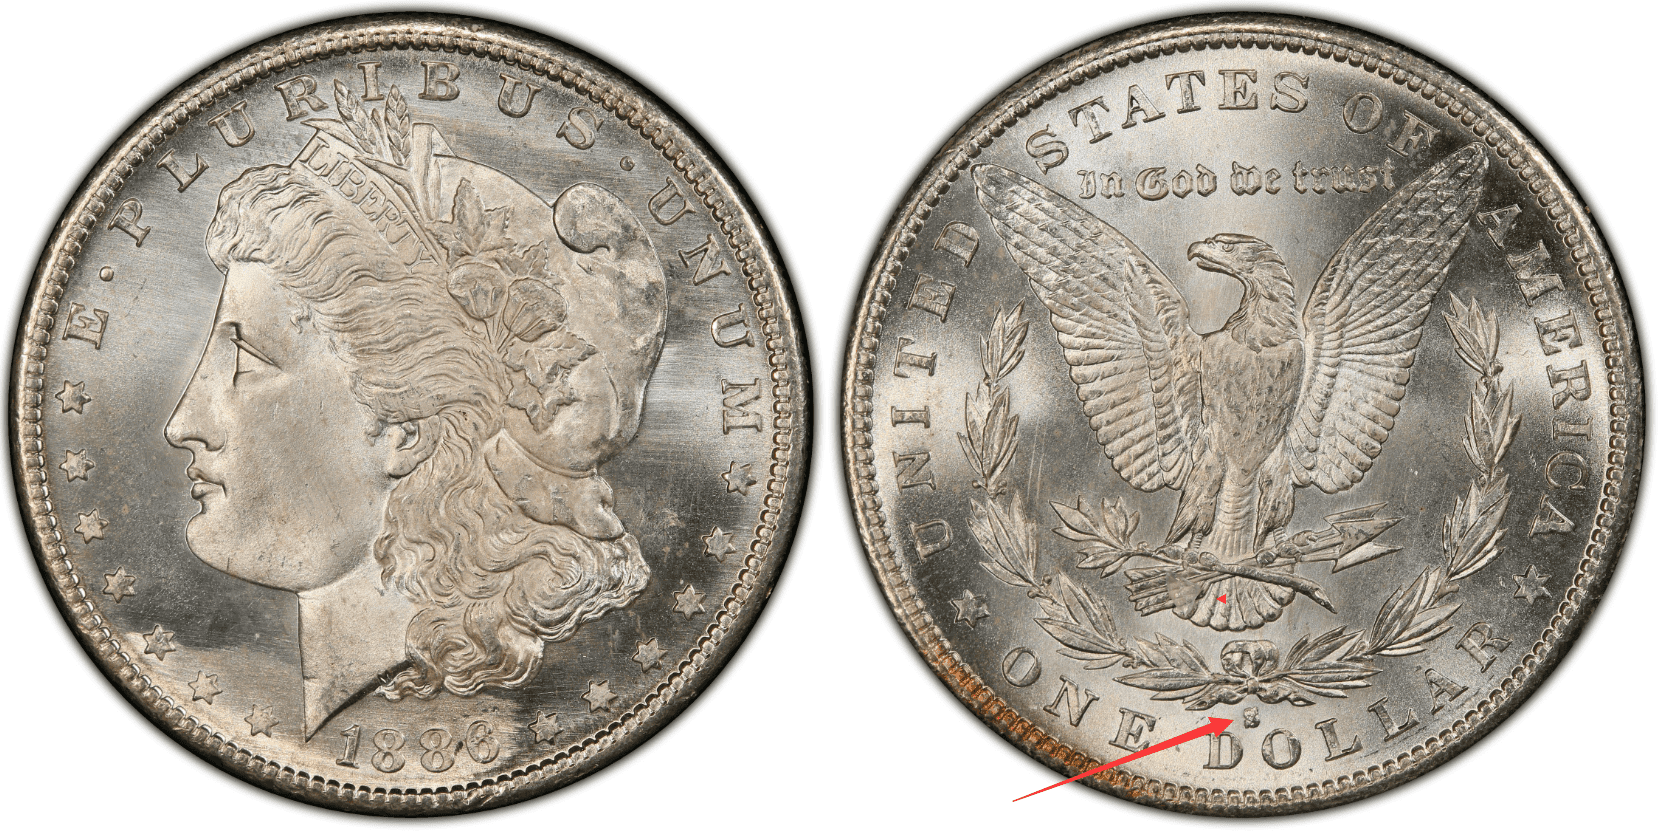 1886-S Silver Dollar Value